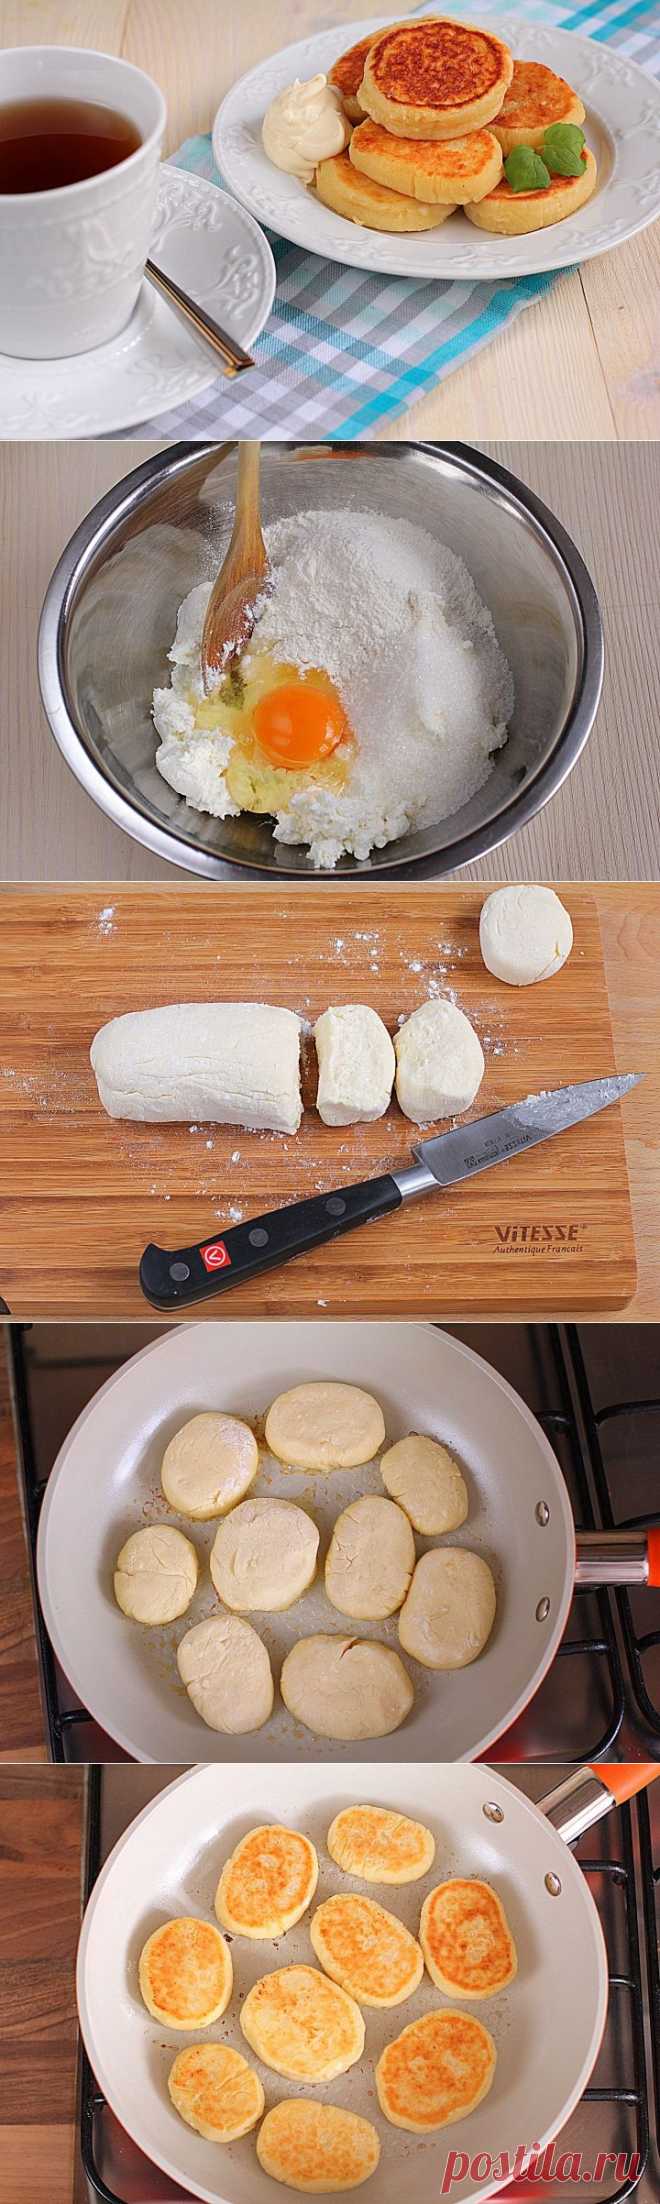 Сырники рецепт: как приготовить - рецепт приготовления, фото и состав | Леди@Mail.Ru